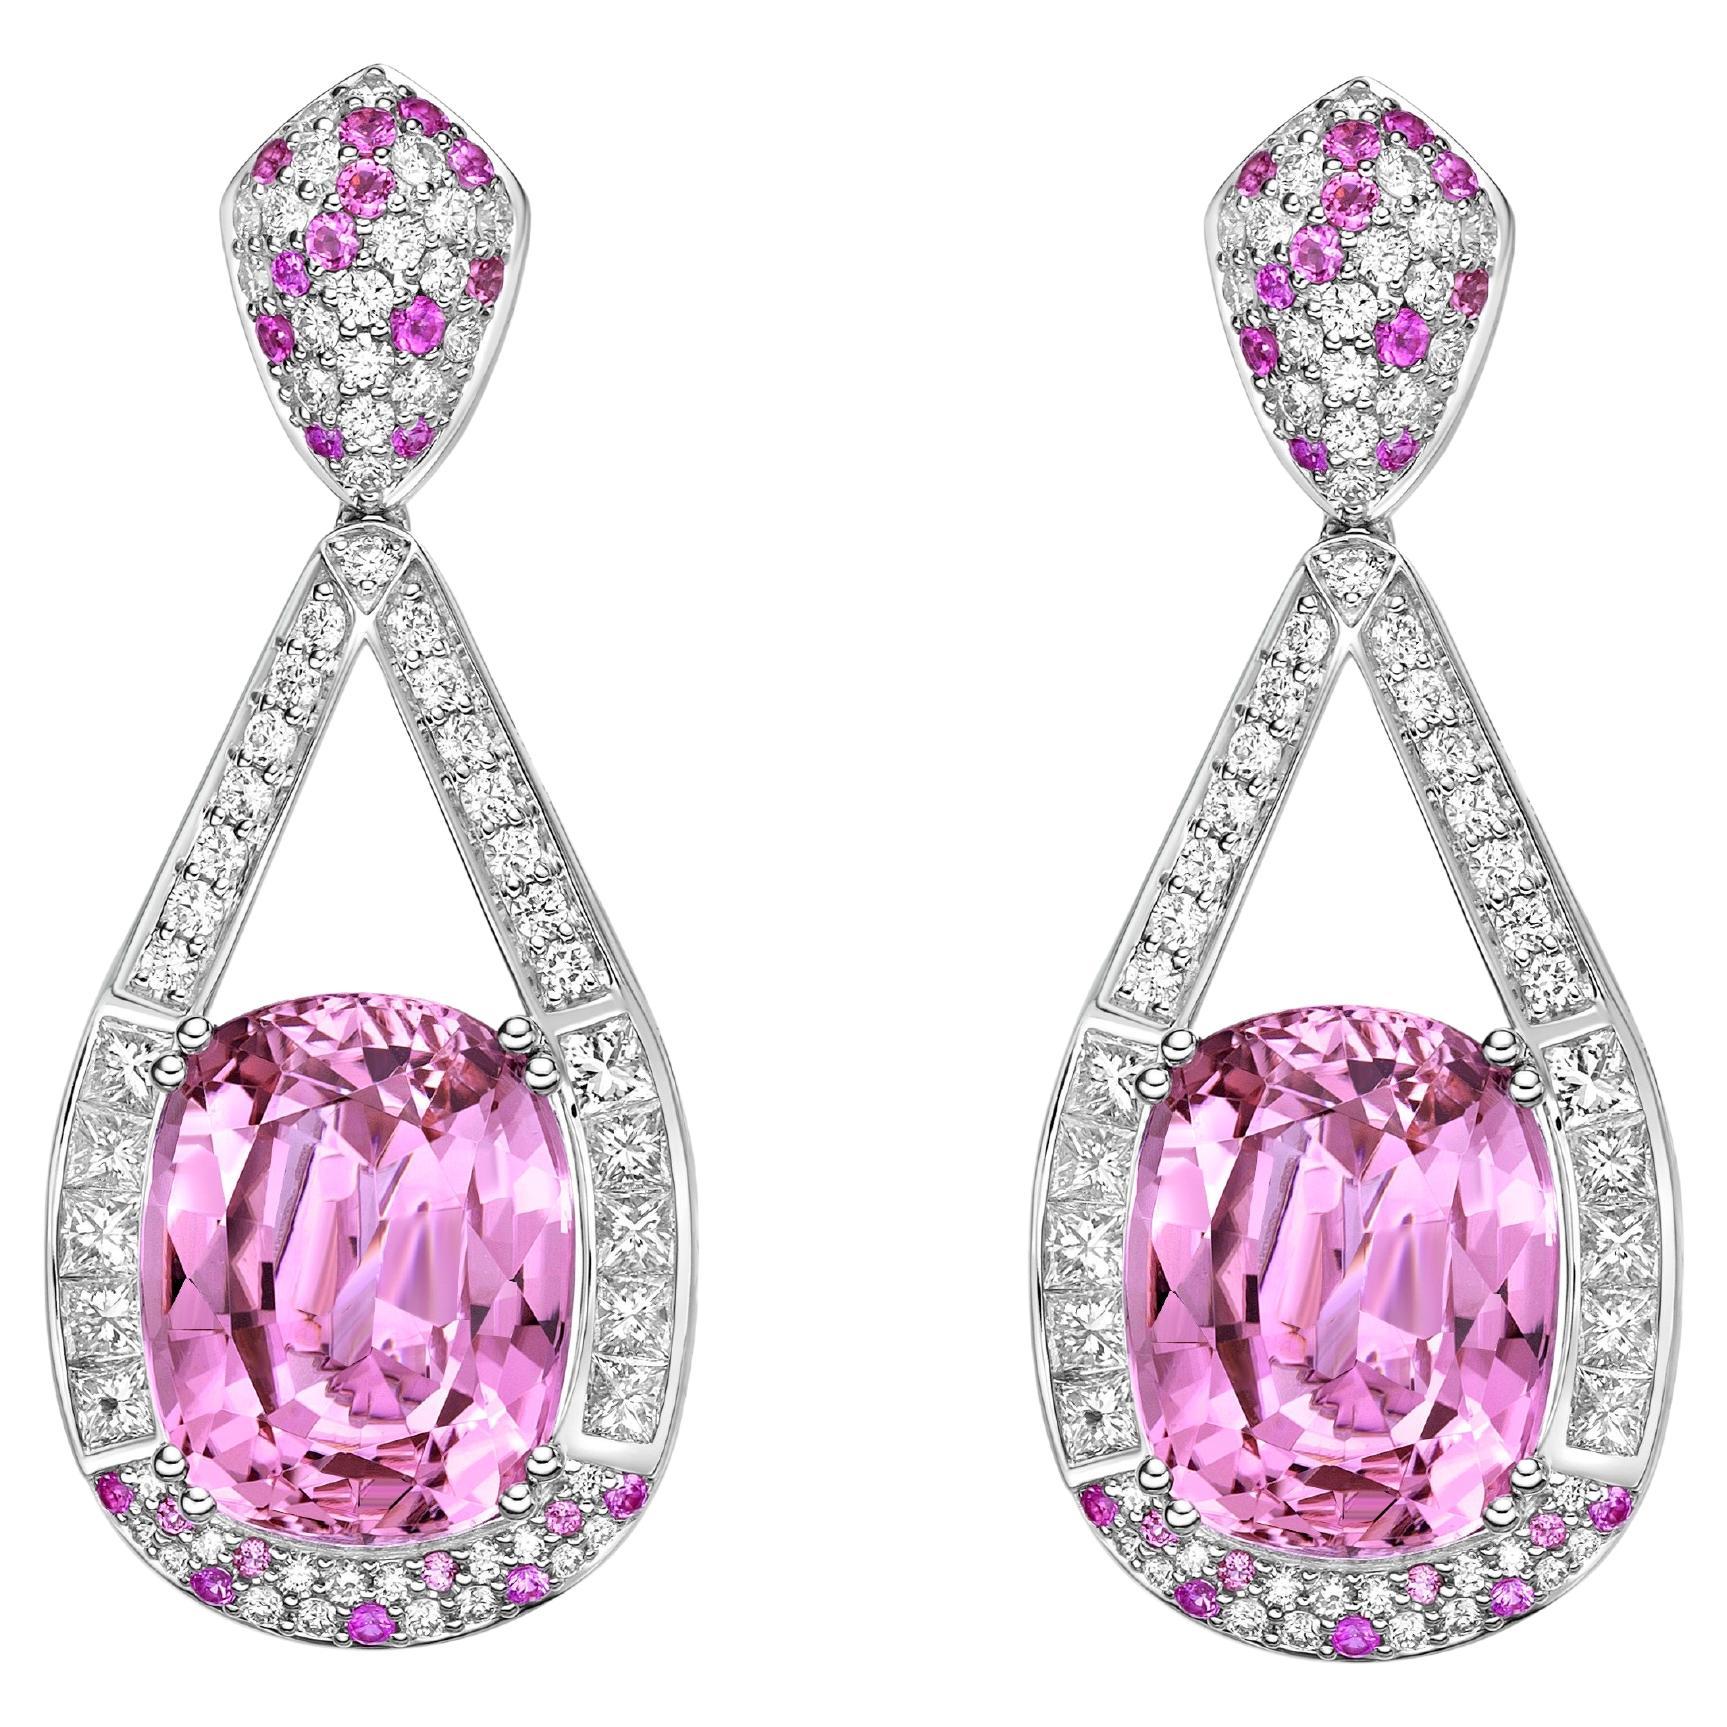 17.72 Carat Pink Tourmaline Drop Earrings in 18Karat White Gold with Diamond.